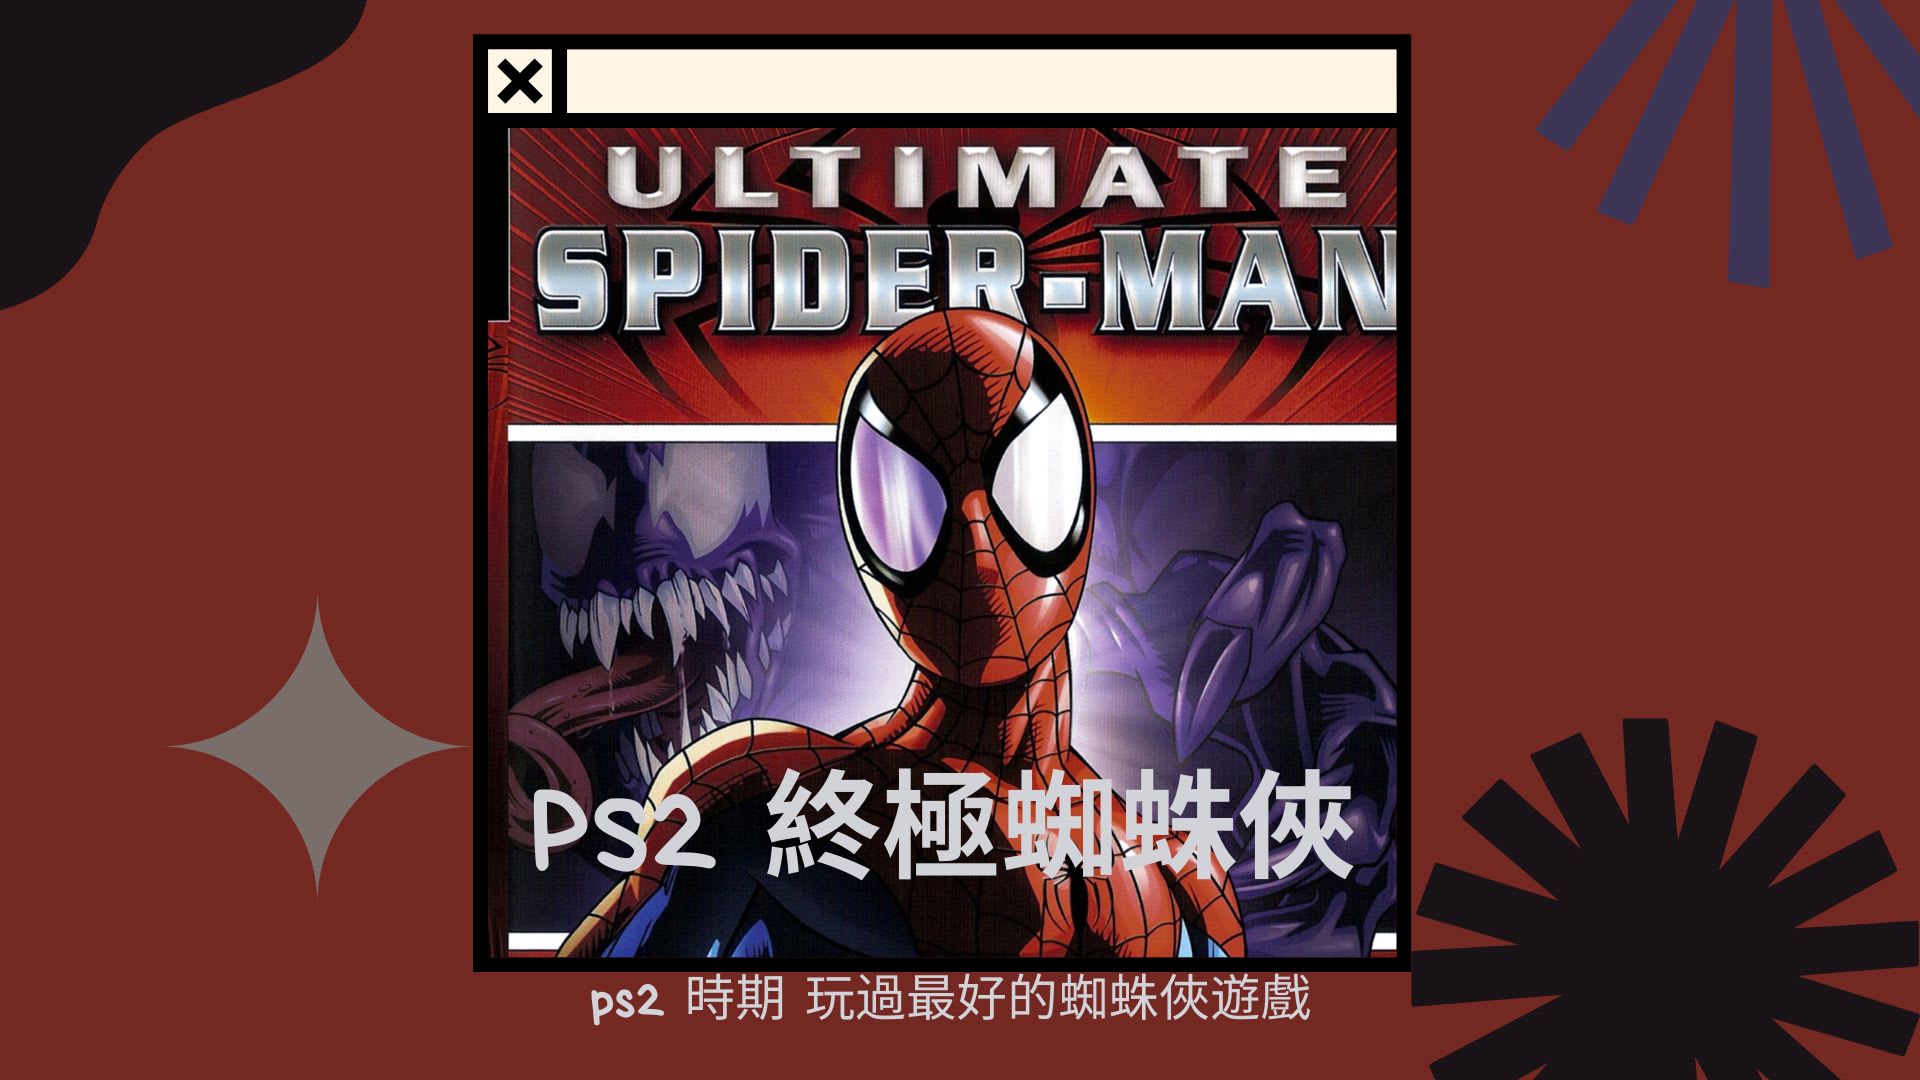 PS2 終極蜘蛛俠